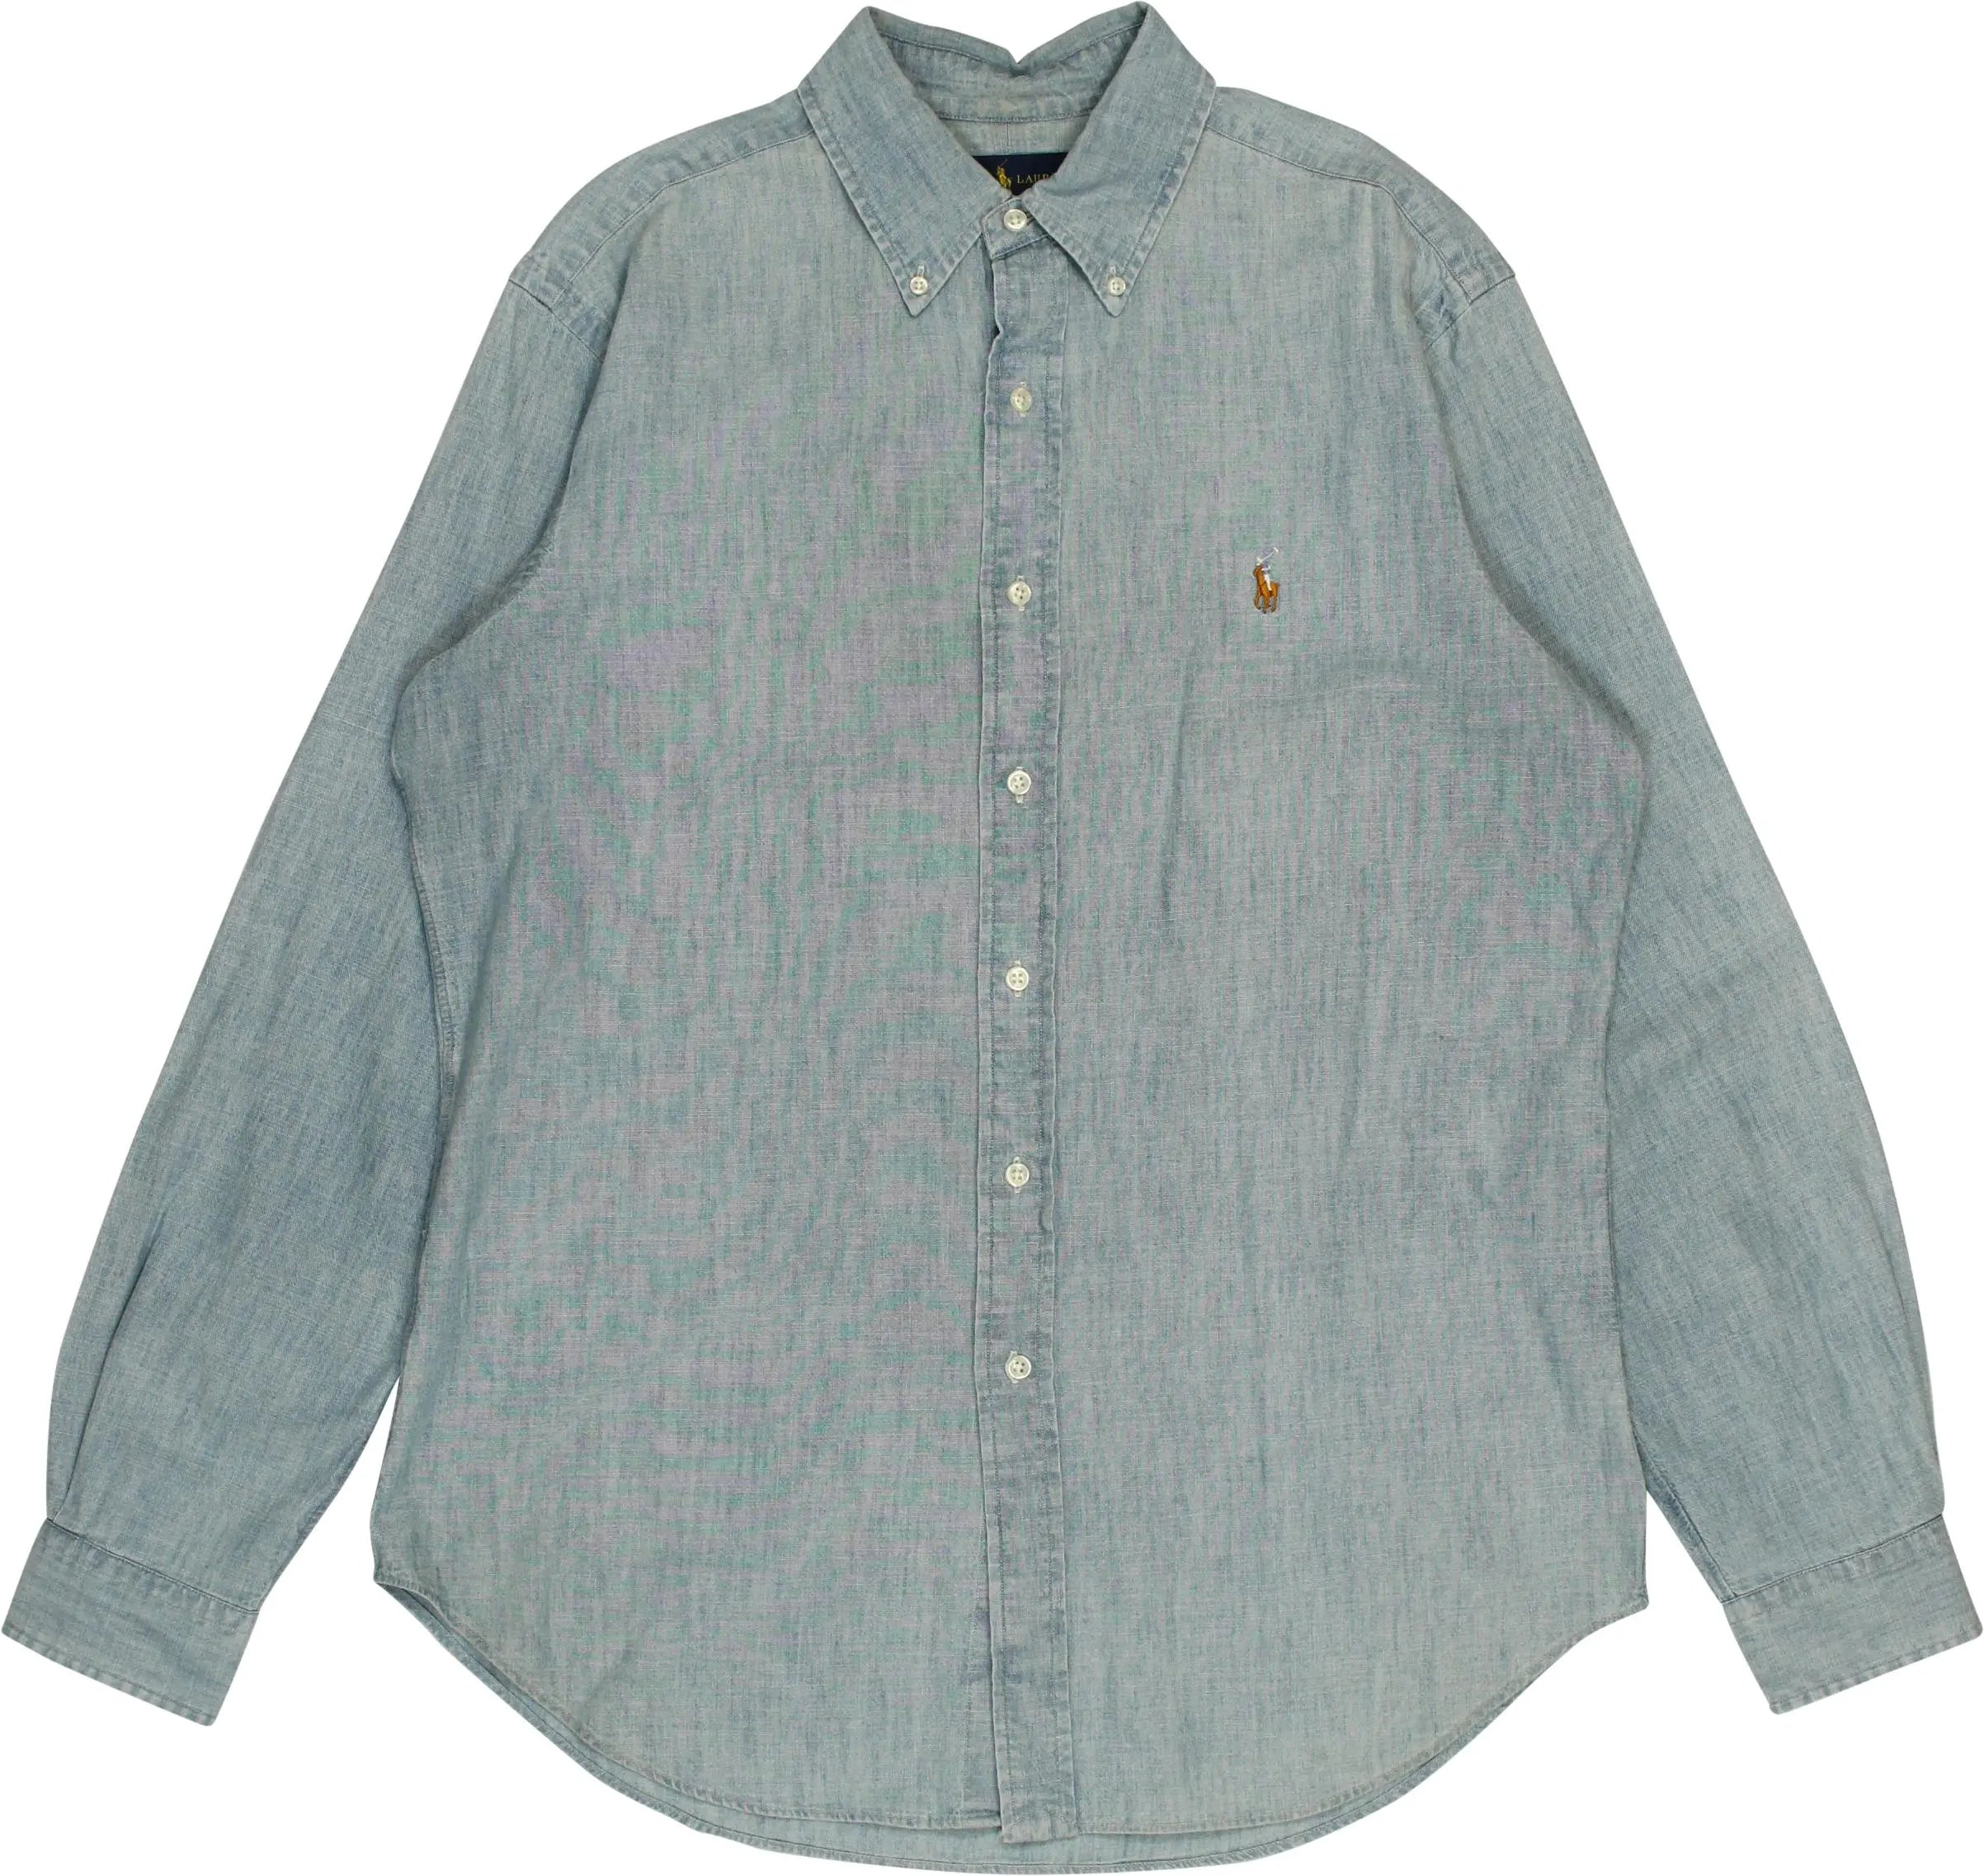 Ralph Lauren - Denim Shirt by Ralph Lauren- ThriftTale.com - Vintage and second handclothing